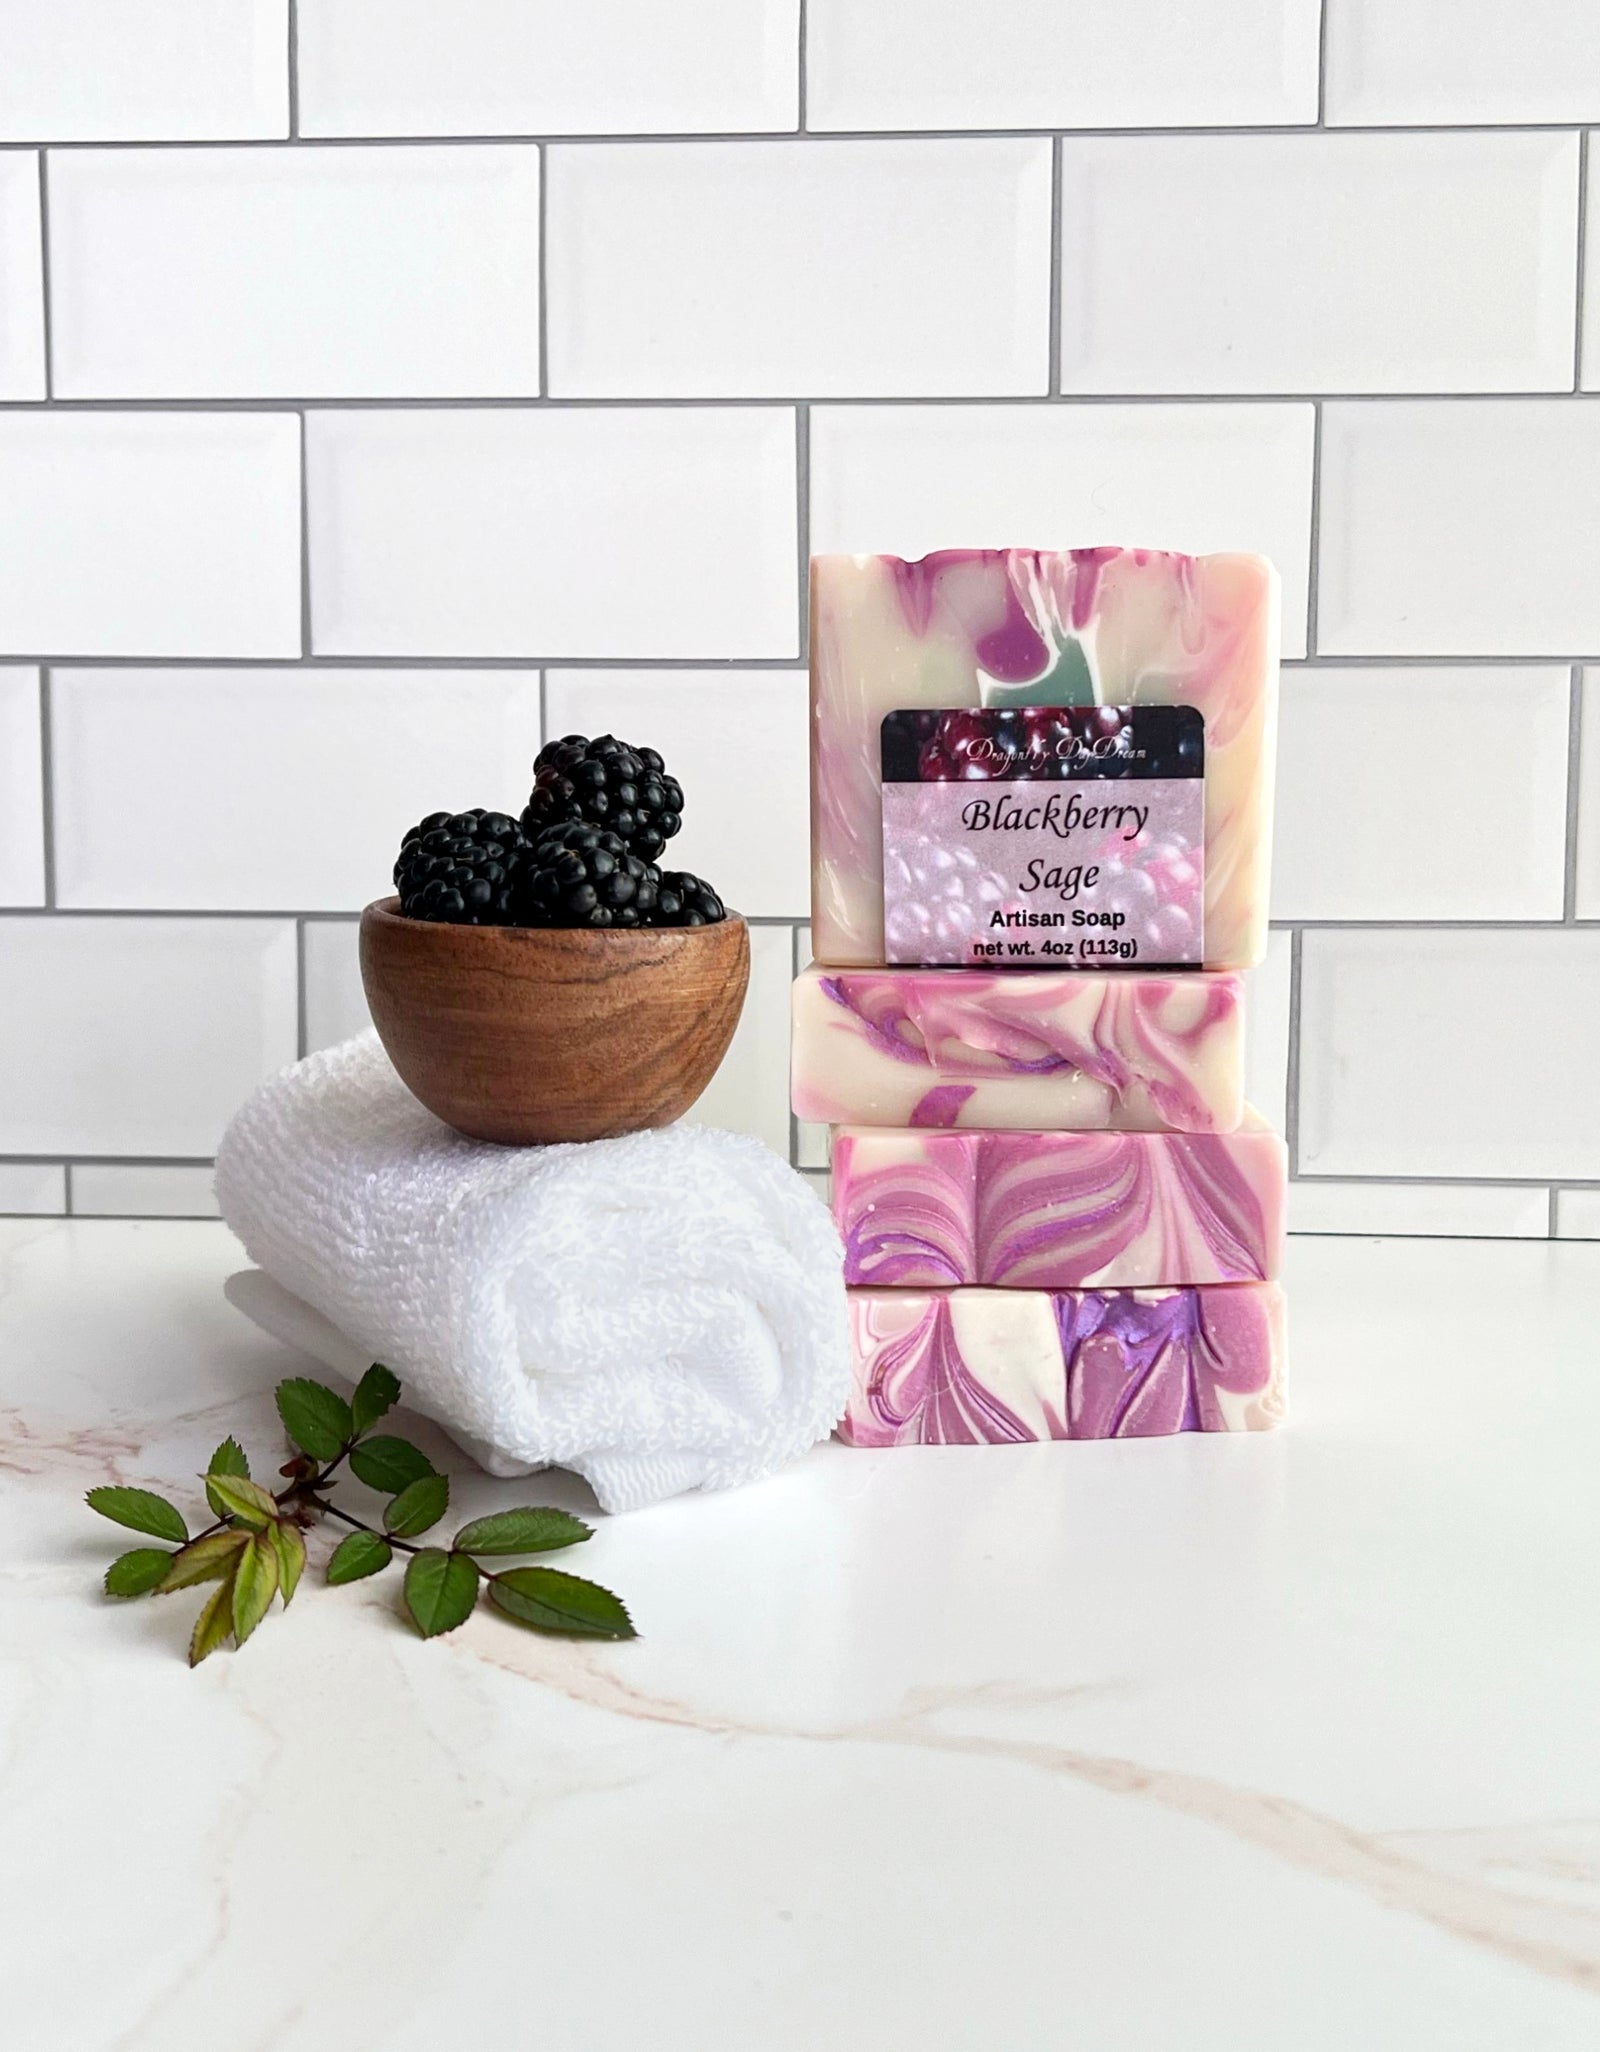 Blackberry Sage Artisan Soap